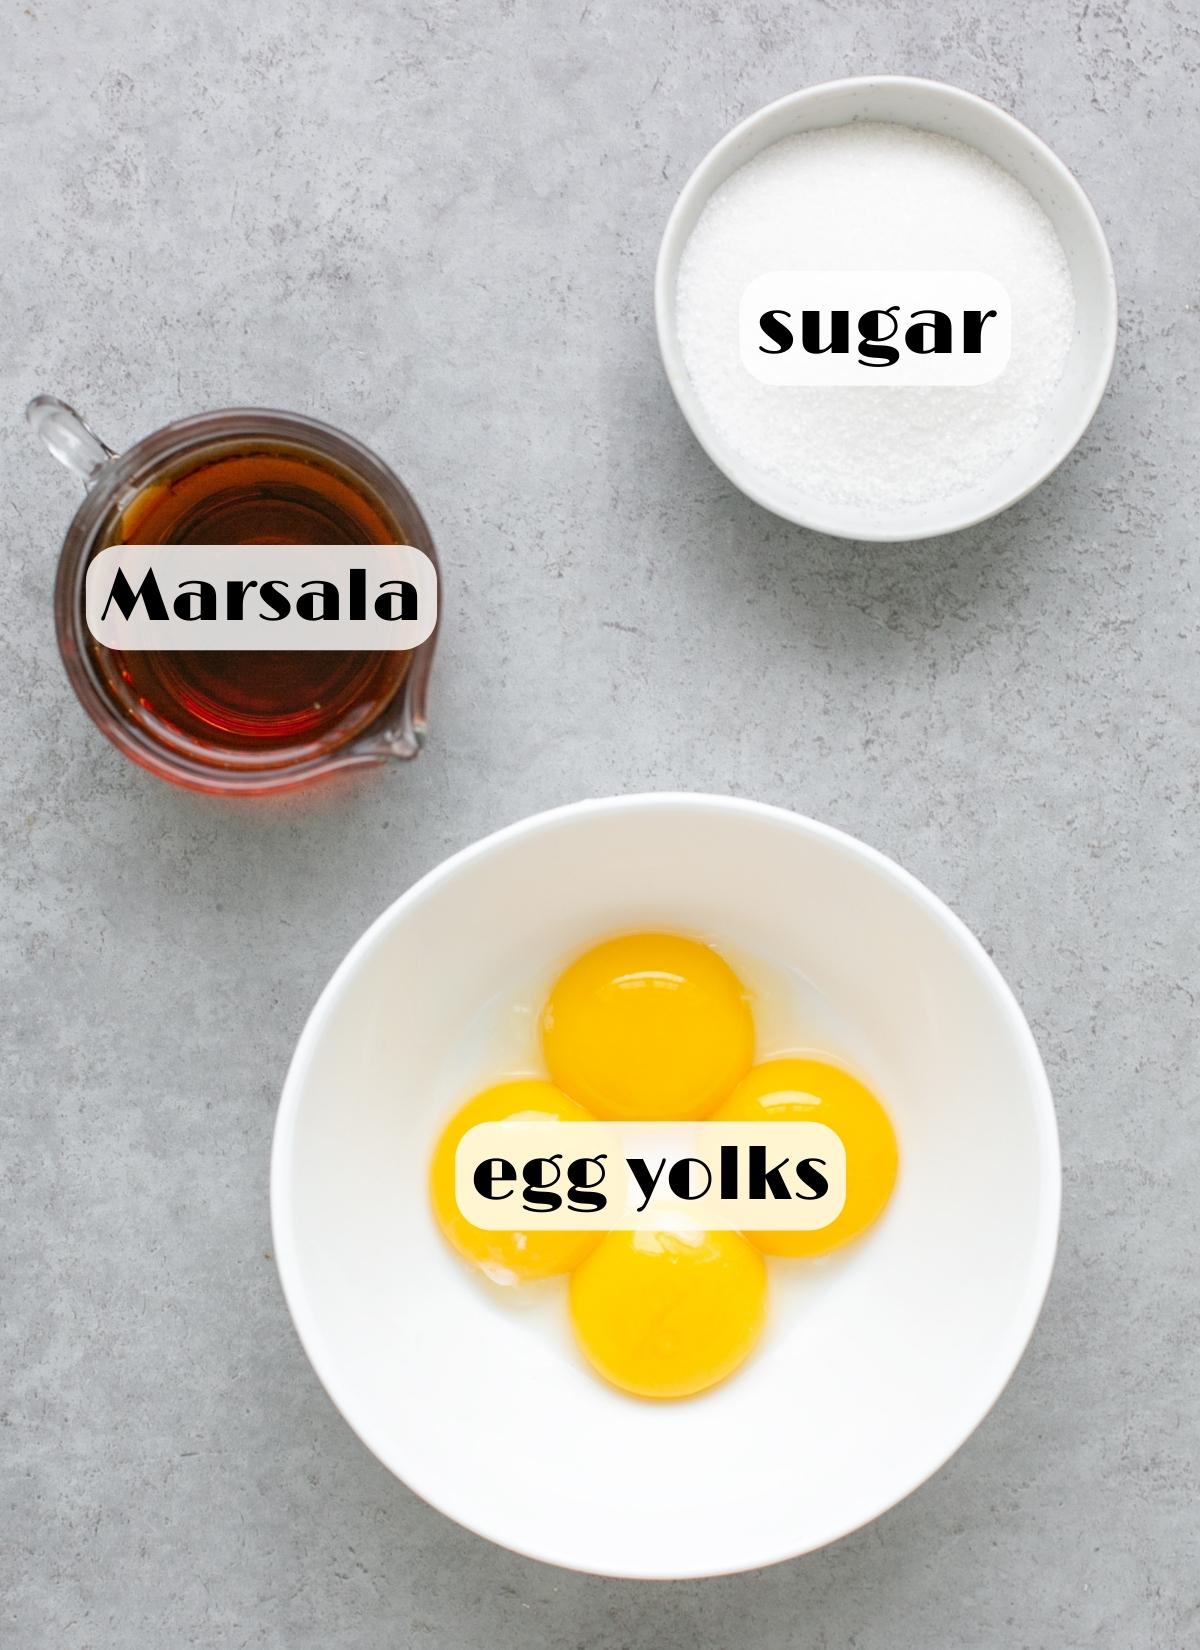 zabaglione ingredients: egg yolks, sugar, marsala wine.